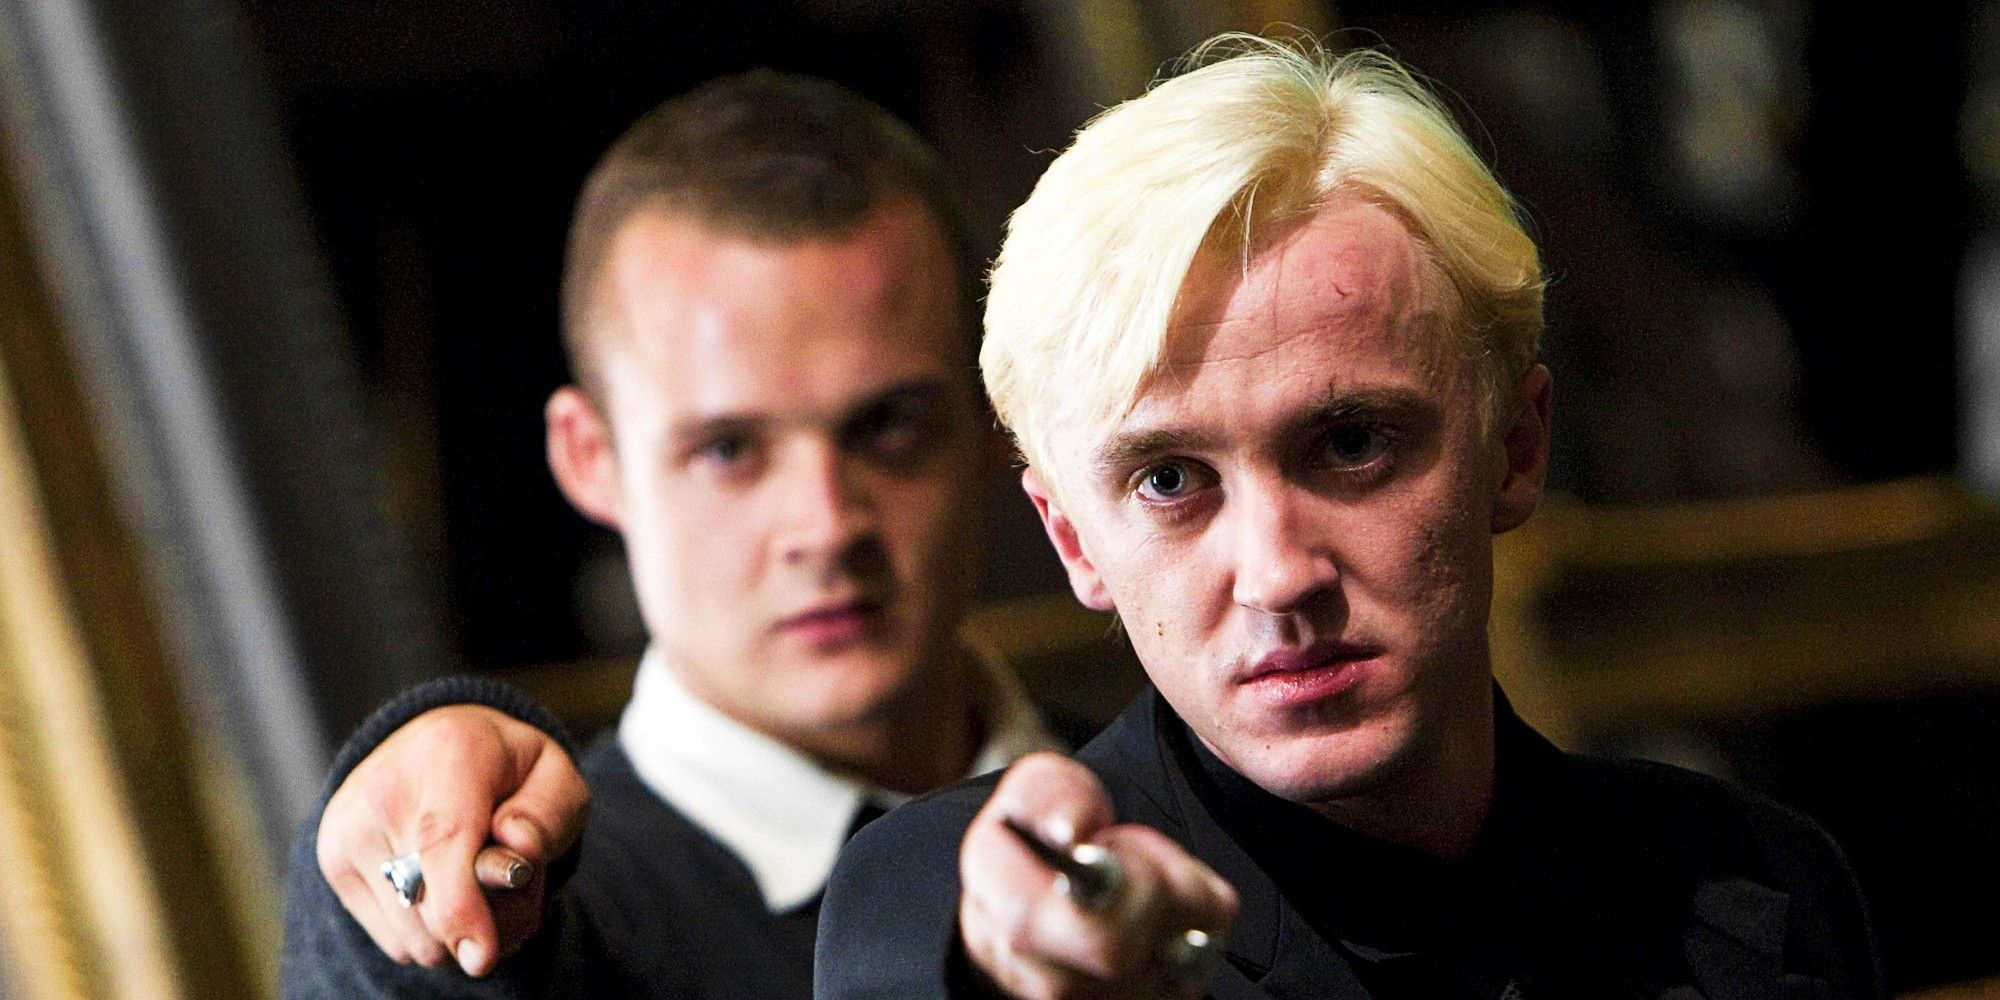 Tom Felton as Draco Malfoy In Harry Potter